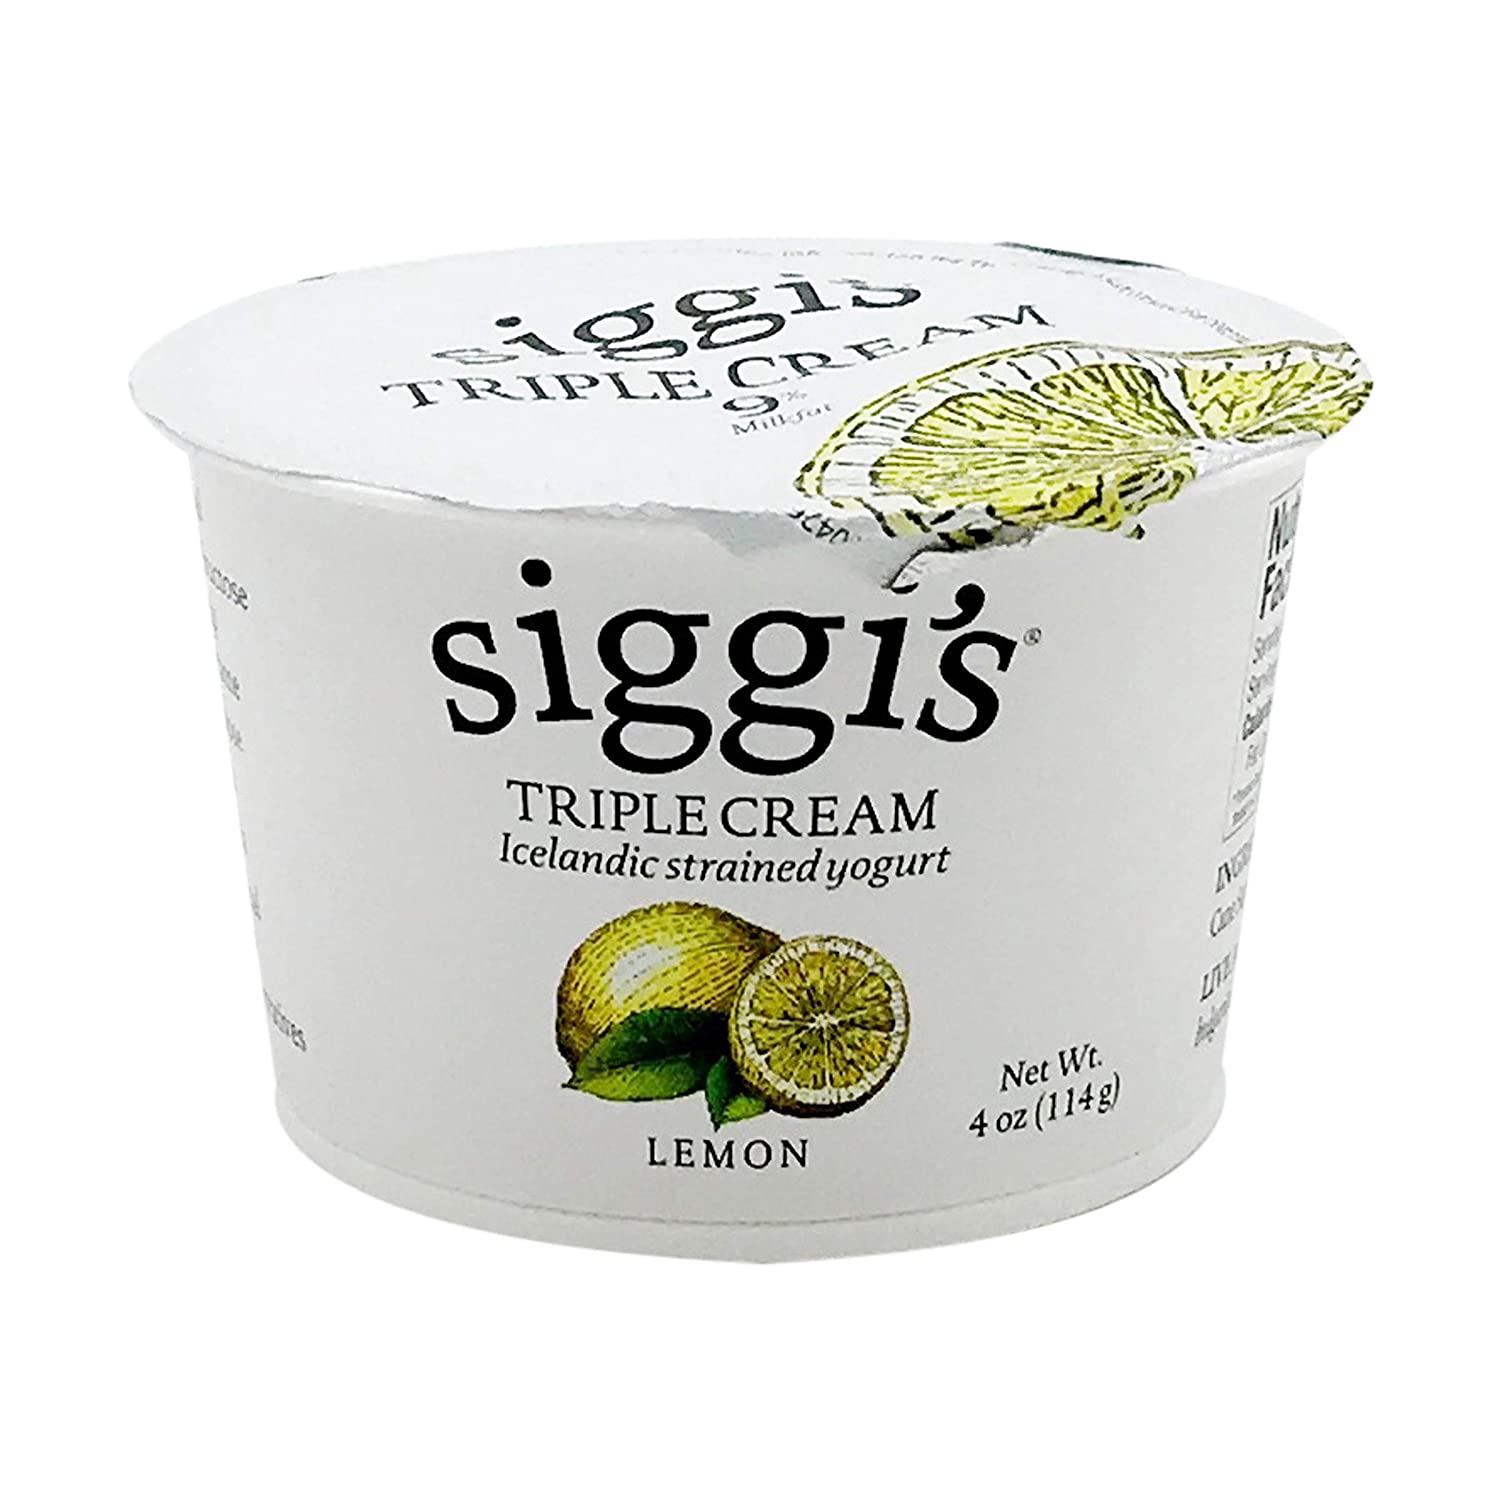 Siggis Icelandic Style Strained Triple Cream Yogurt, Lemon, 4 Oz